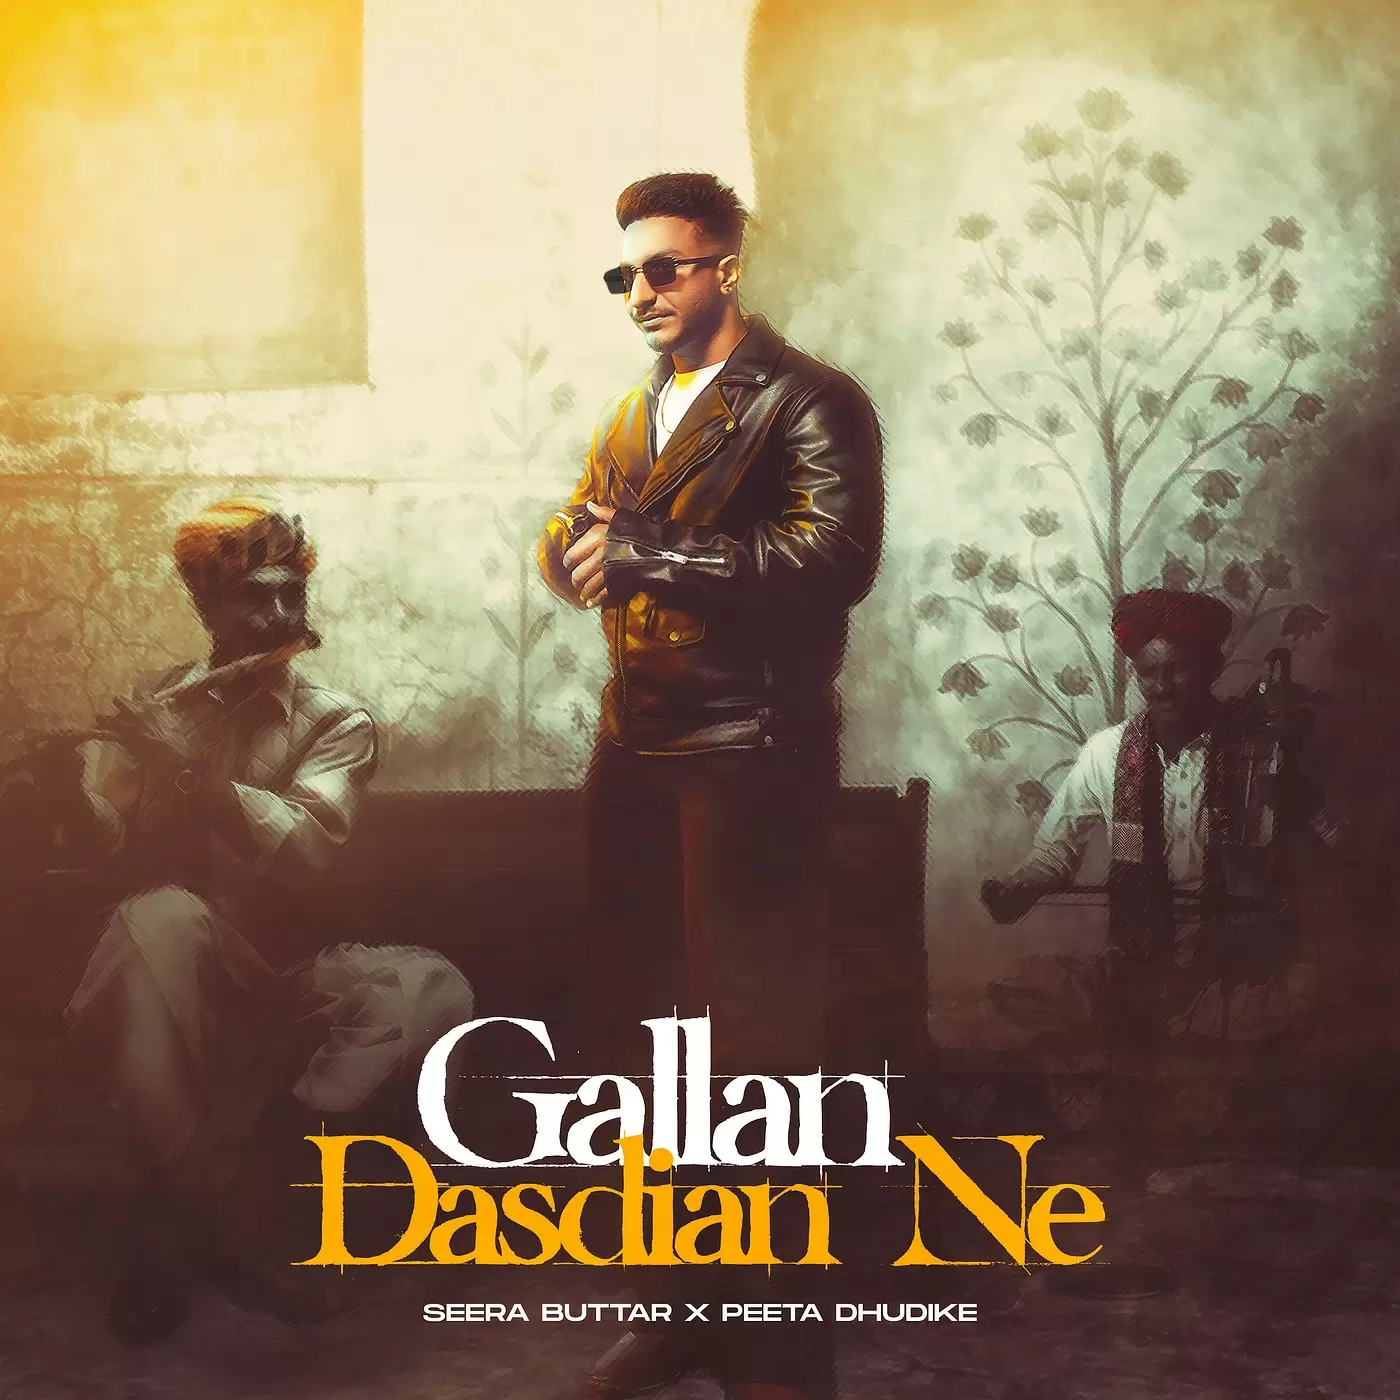 Gallan Dasdian Ne Seera Buttar Mp3 Download Song - Mr-Punjab